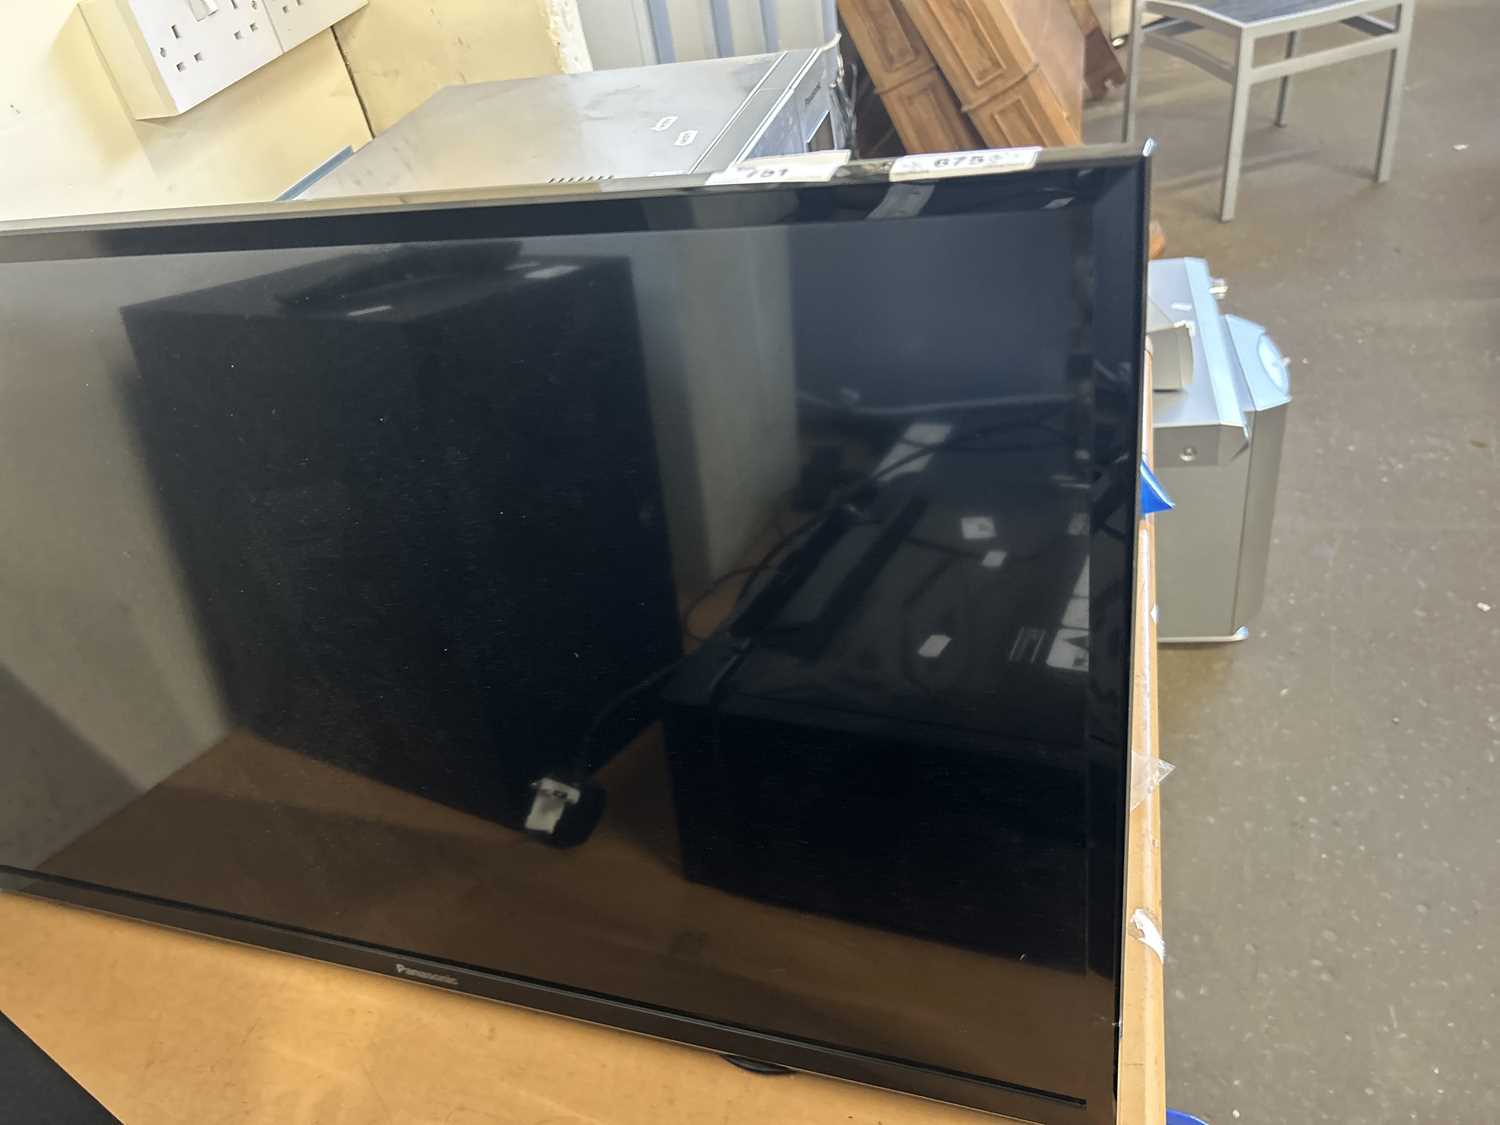 A panasonic flat screen TV